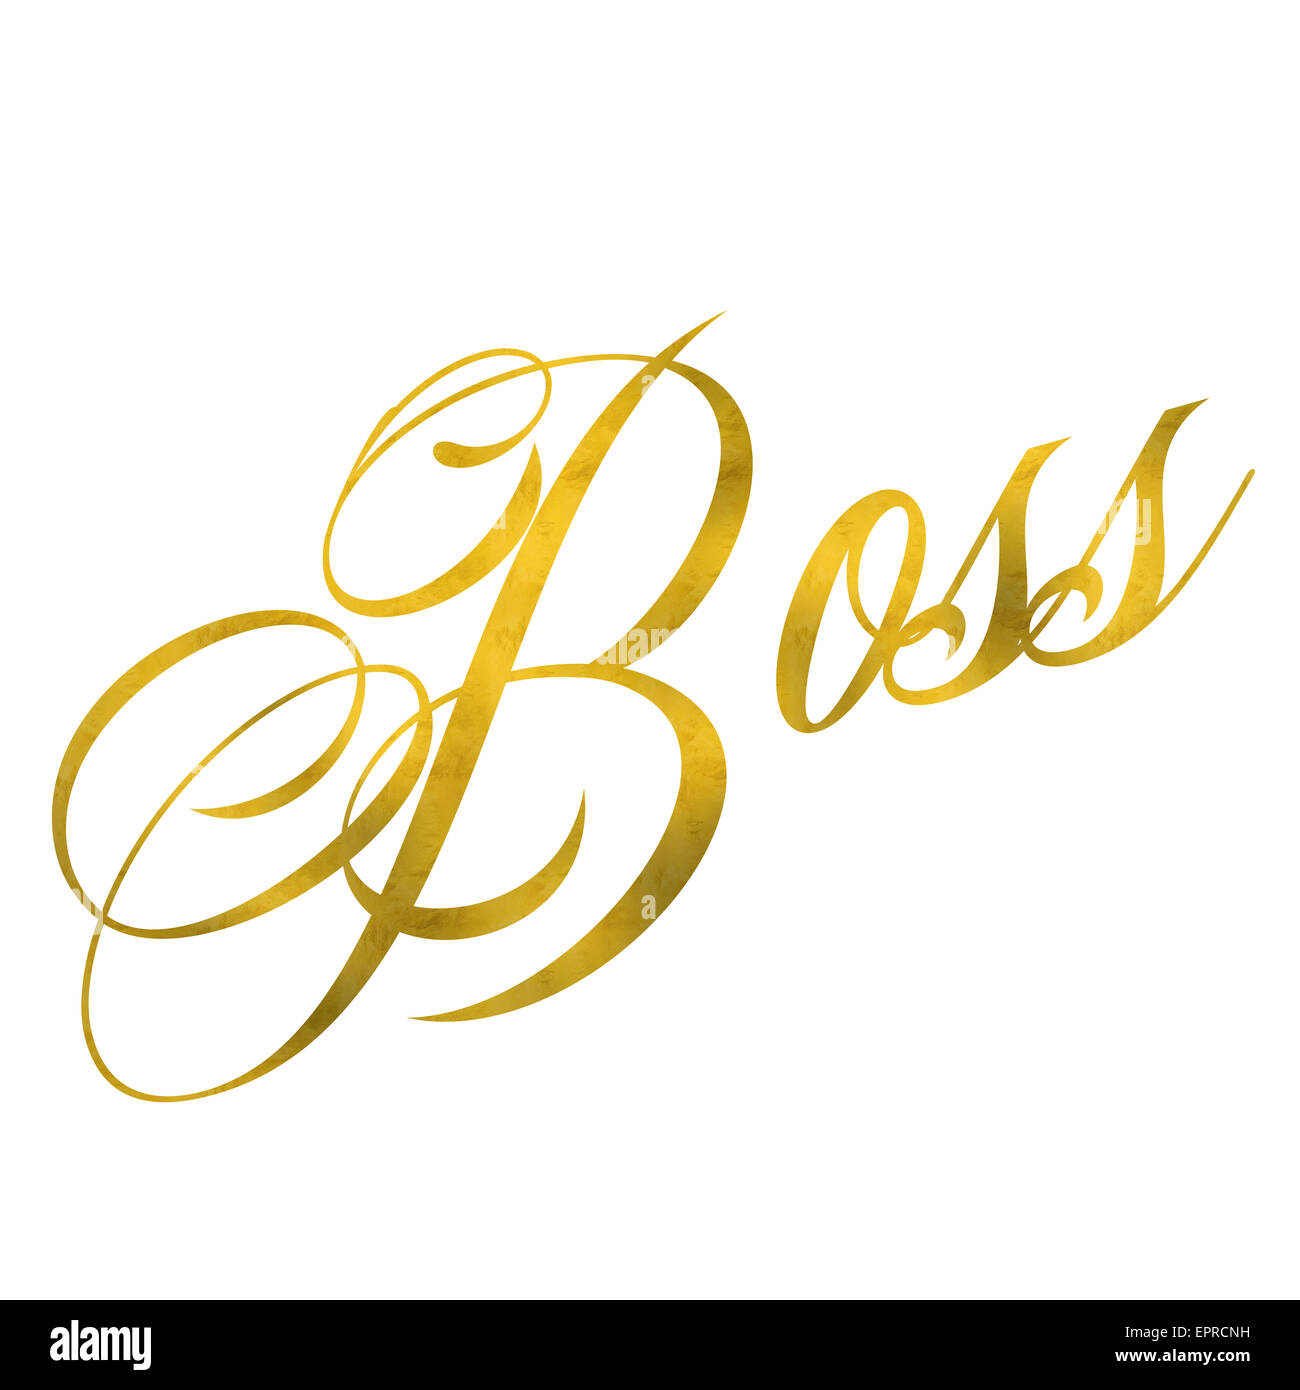 Boss Gold Faux Folie Metallic Glitter Zitat Isolated on White Background Stockfoto